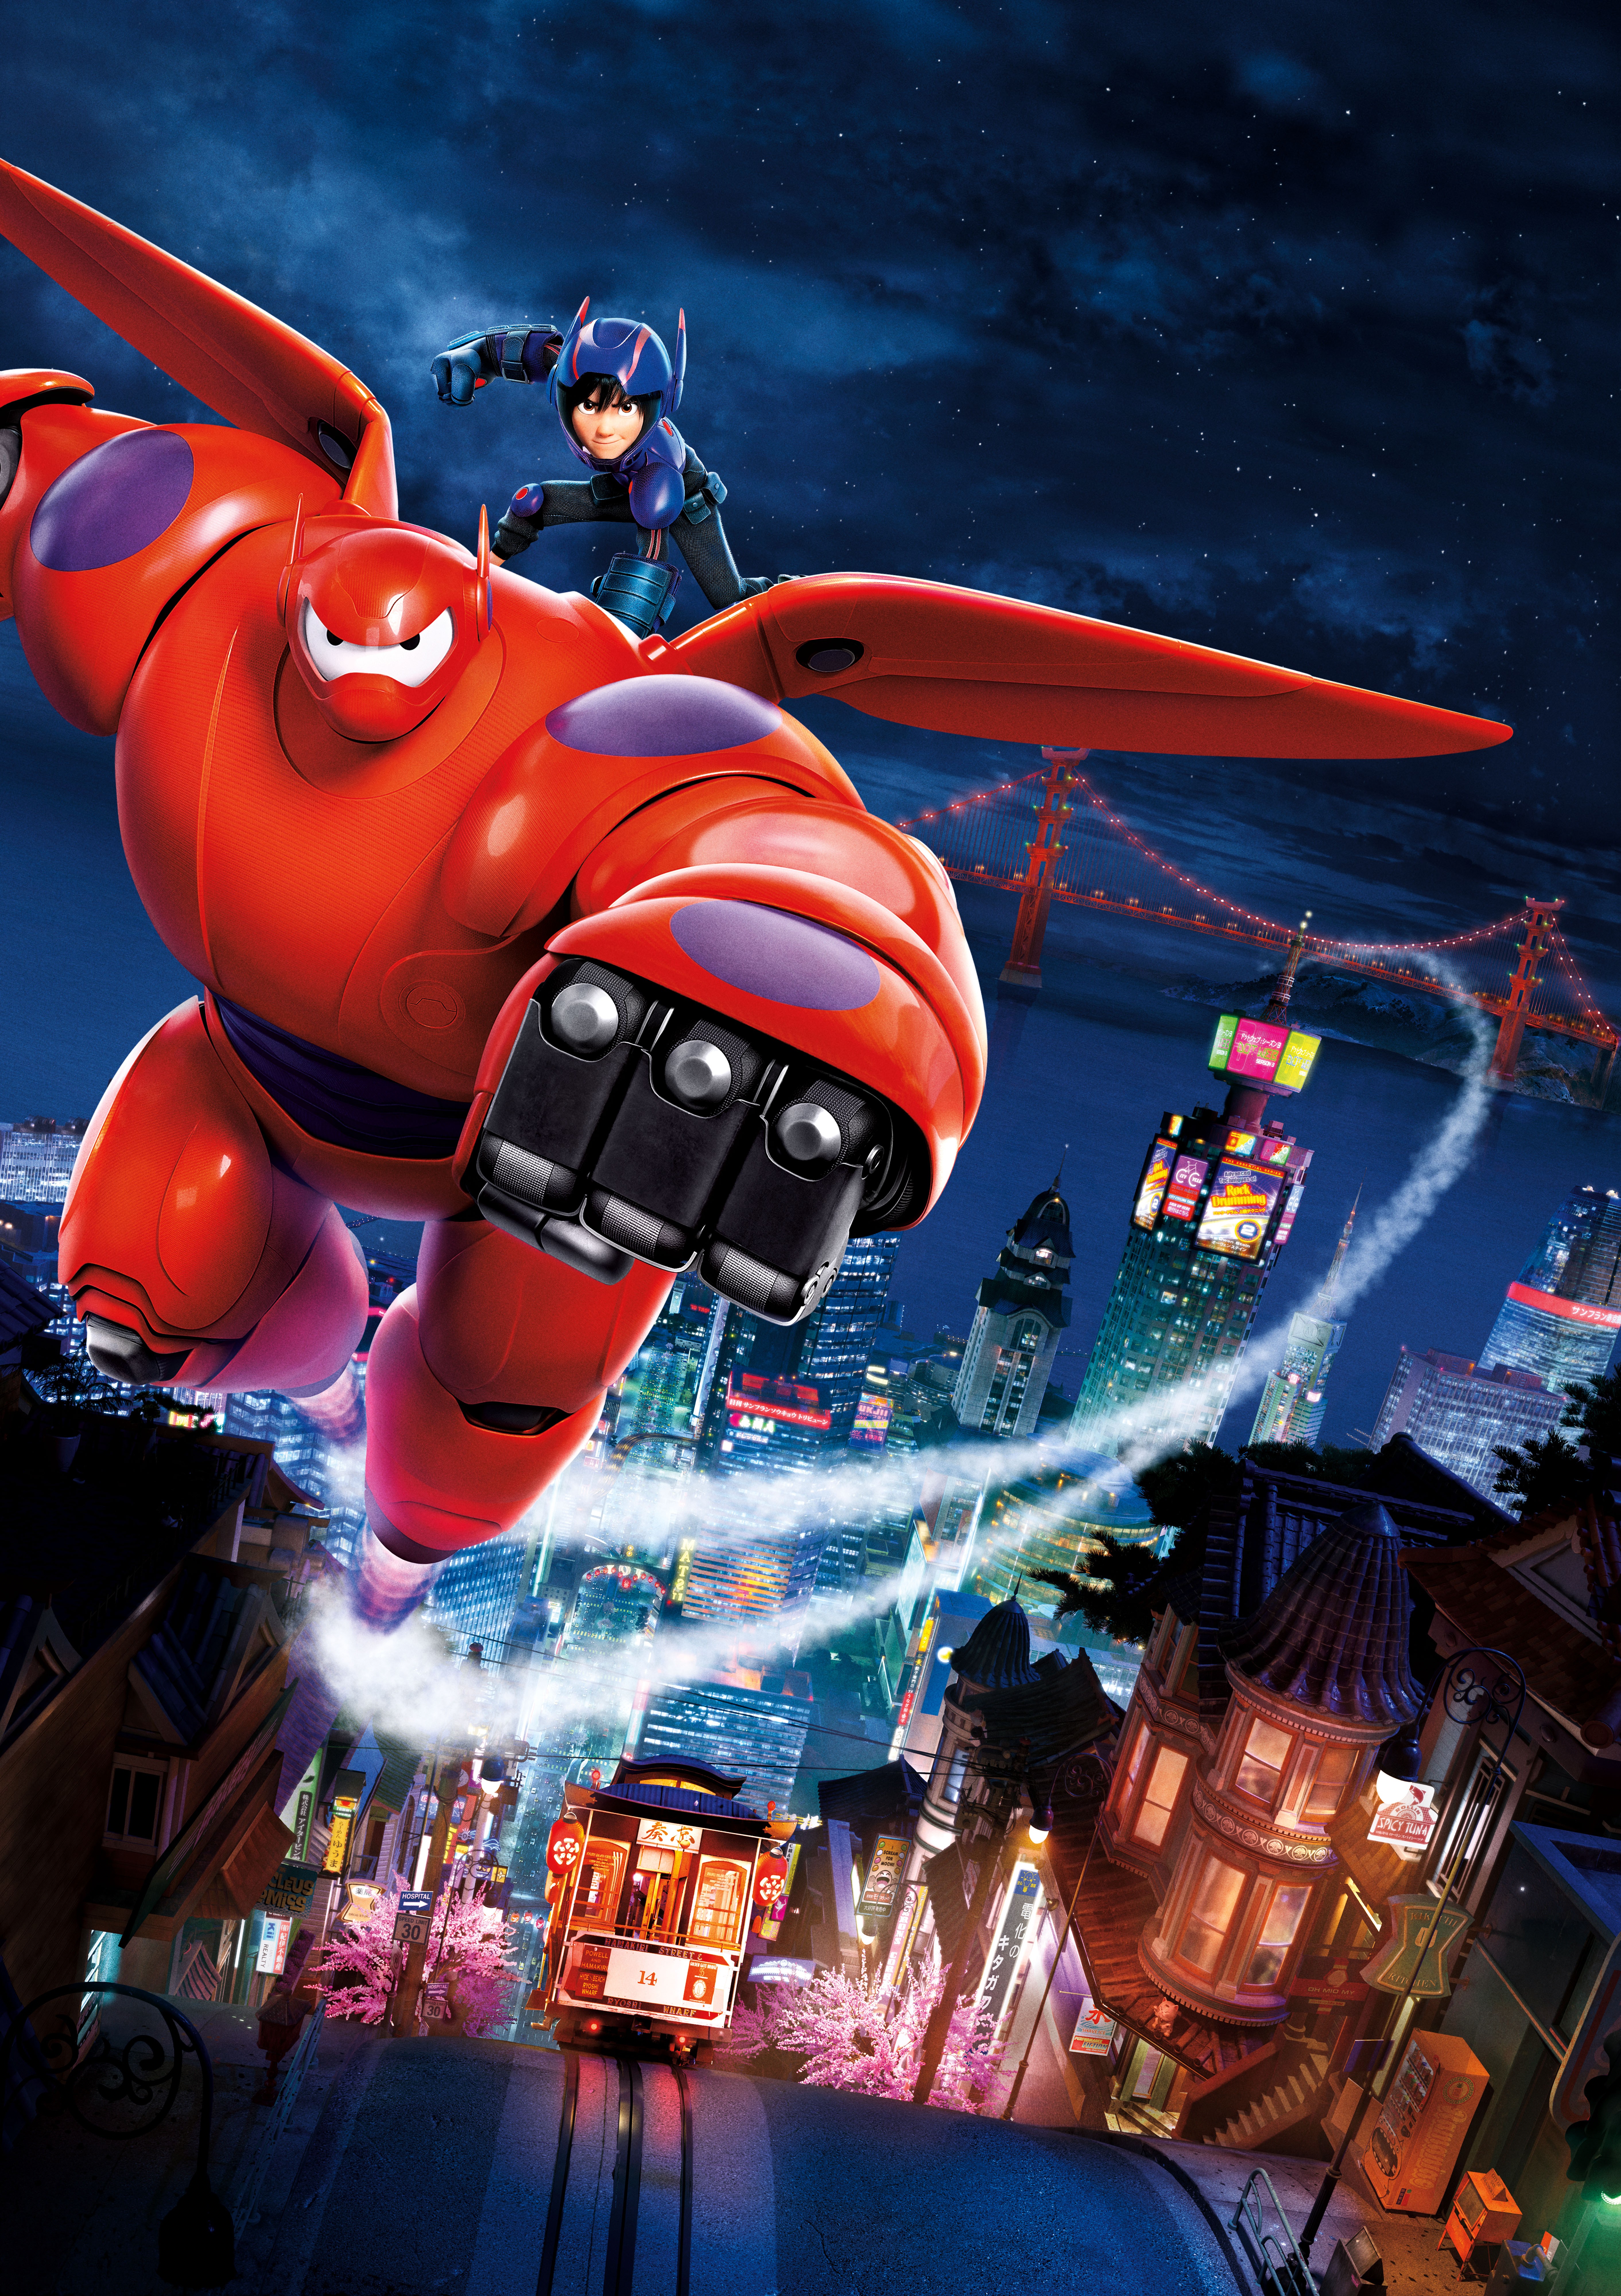 Disney Pixar Animation Studios Baymax Big Hero 6 Movies 2014 Year Animated Movies 5648x8000